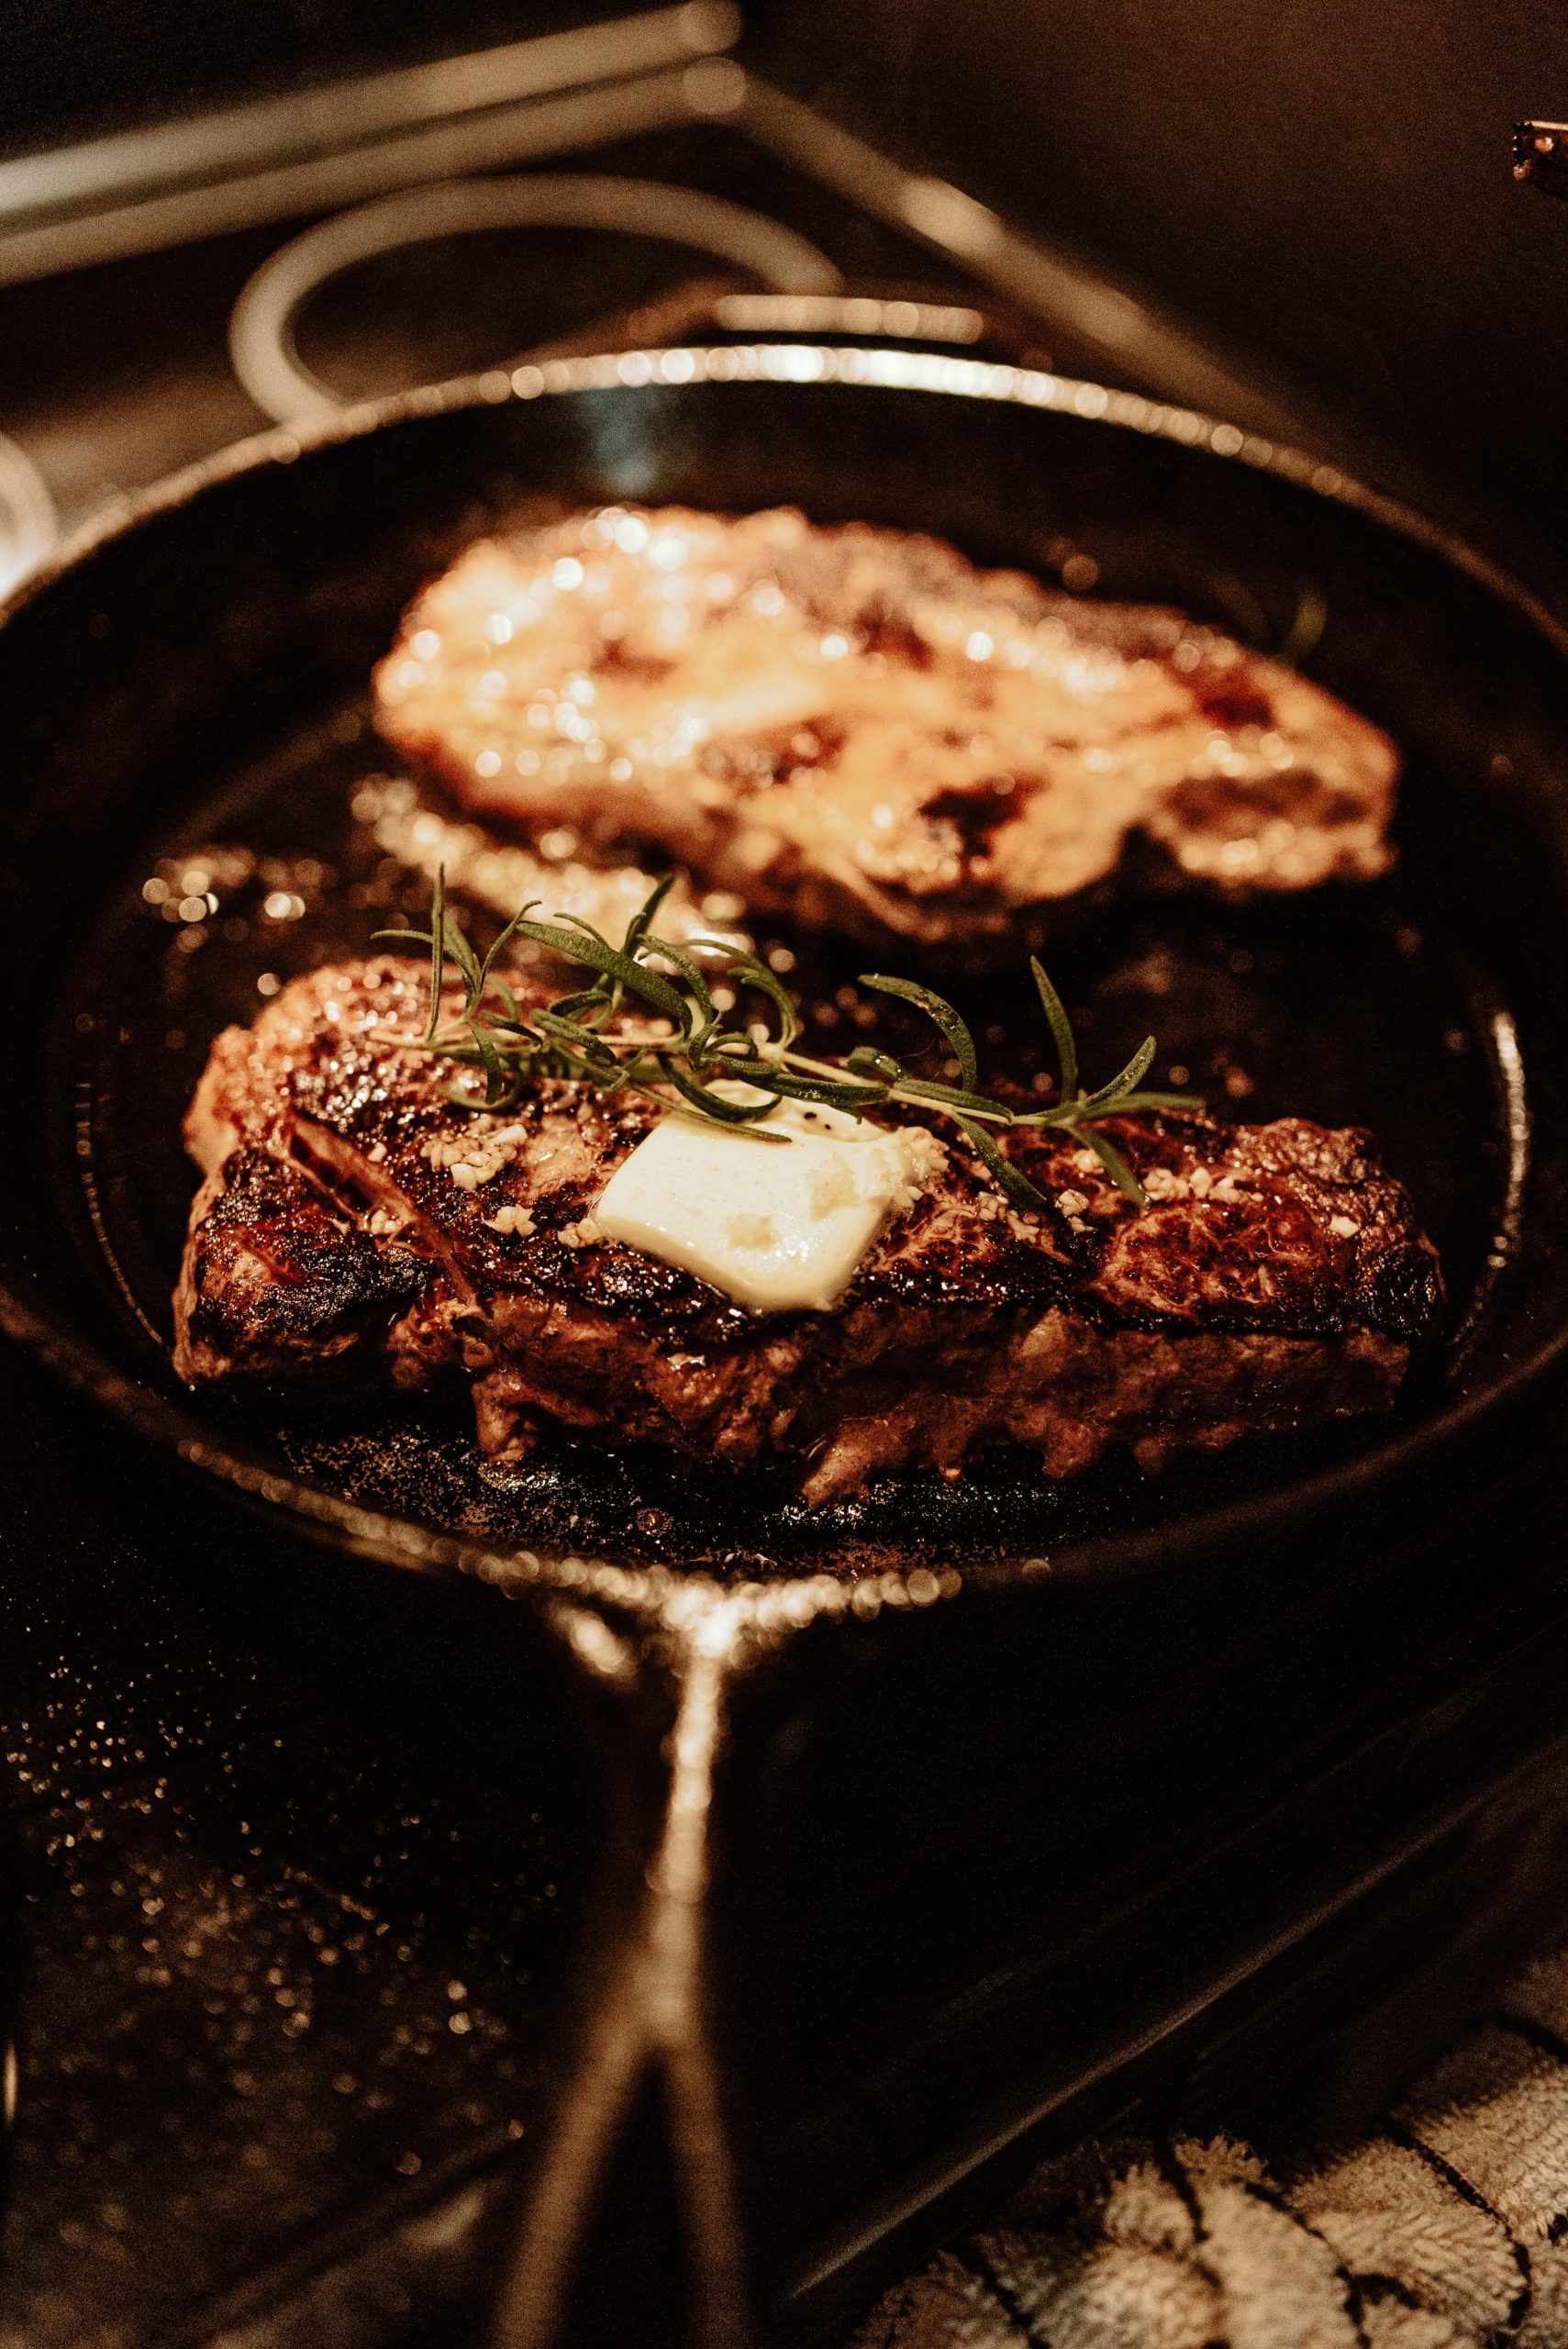 Date Night: Ultimate Steak-cation Class February 11th